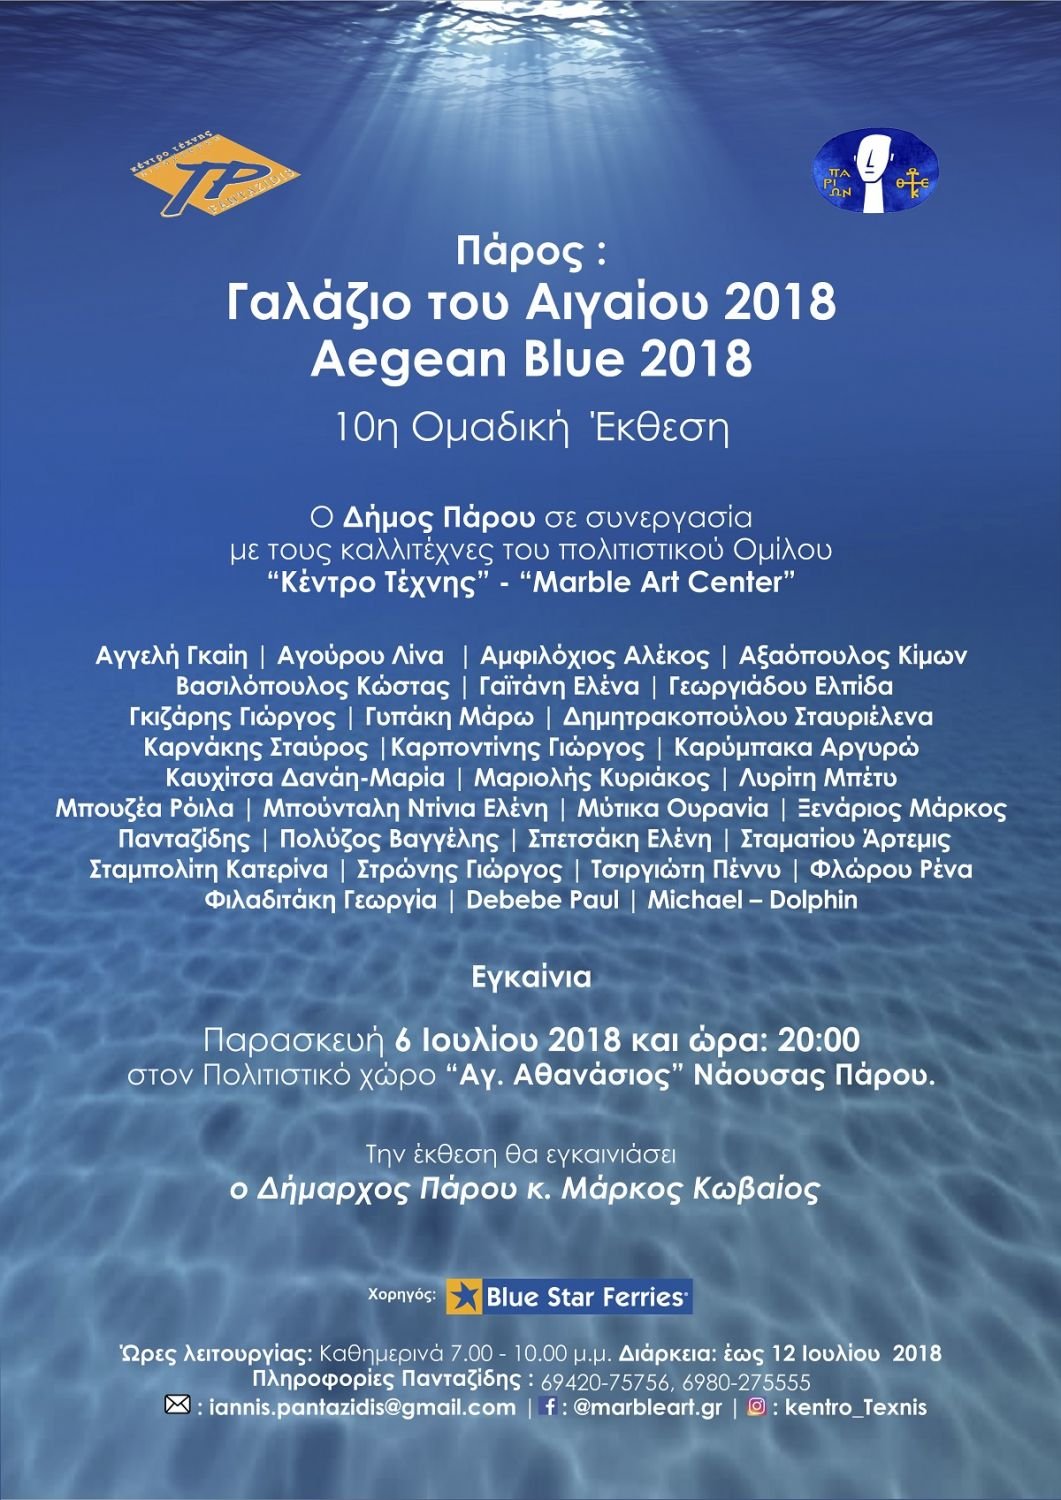 "Aegean Blue 2018" by Pantazidis Art Center, in Paros